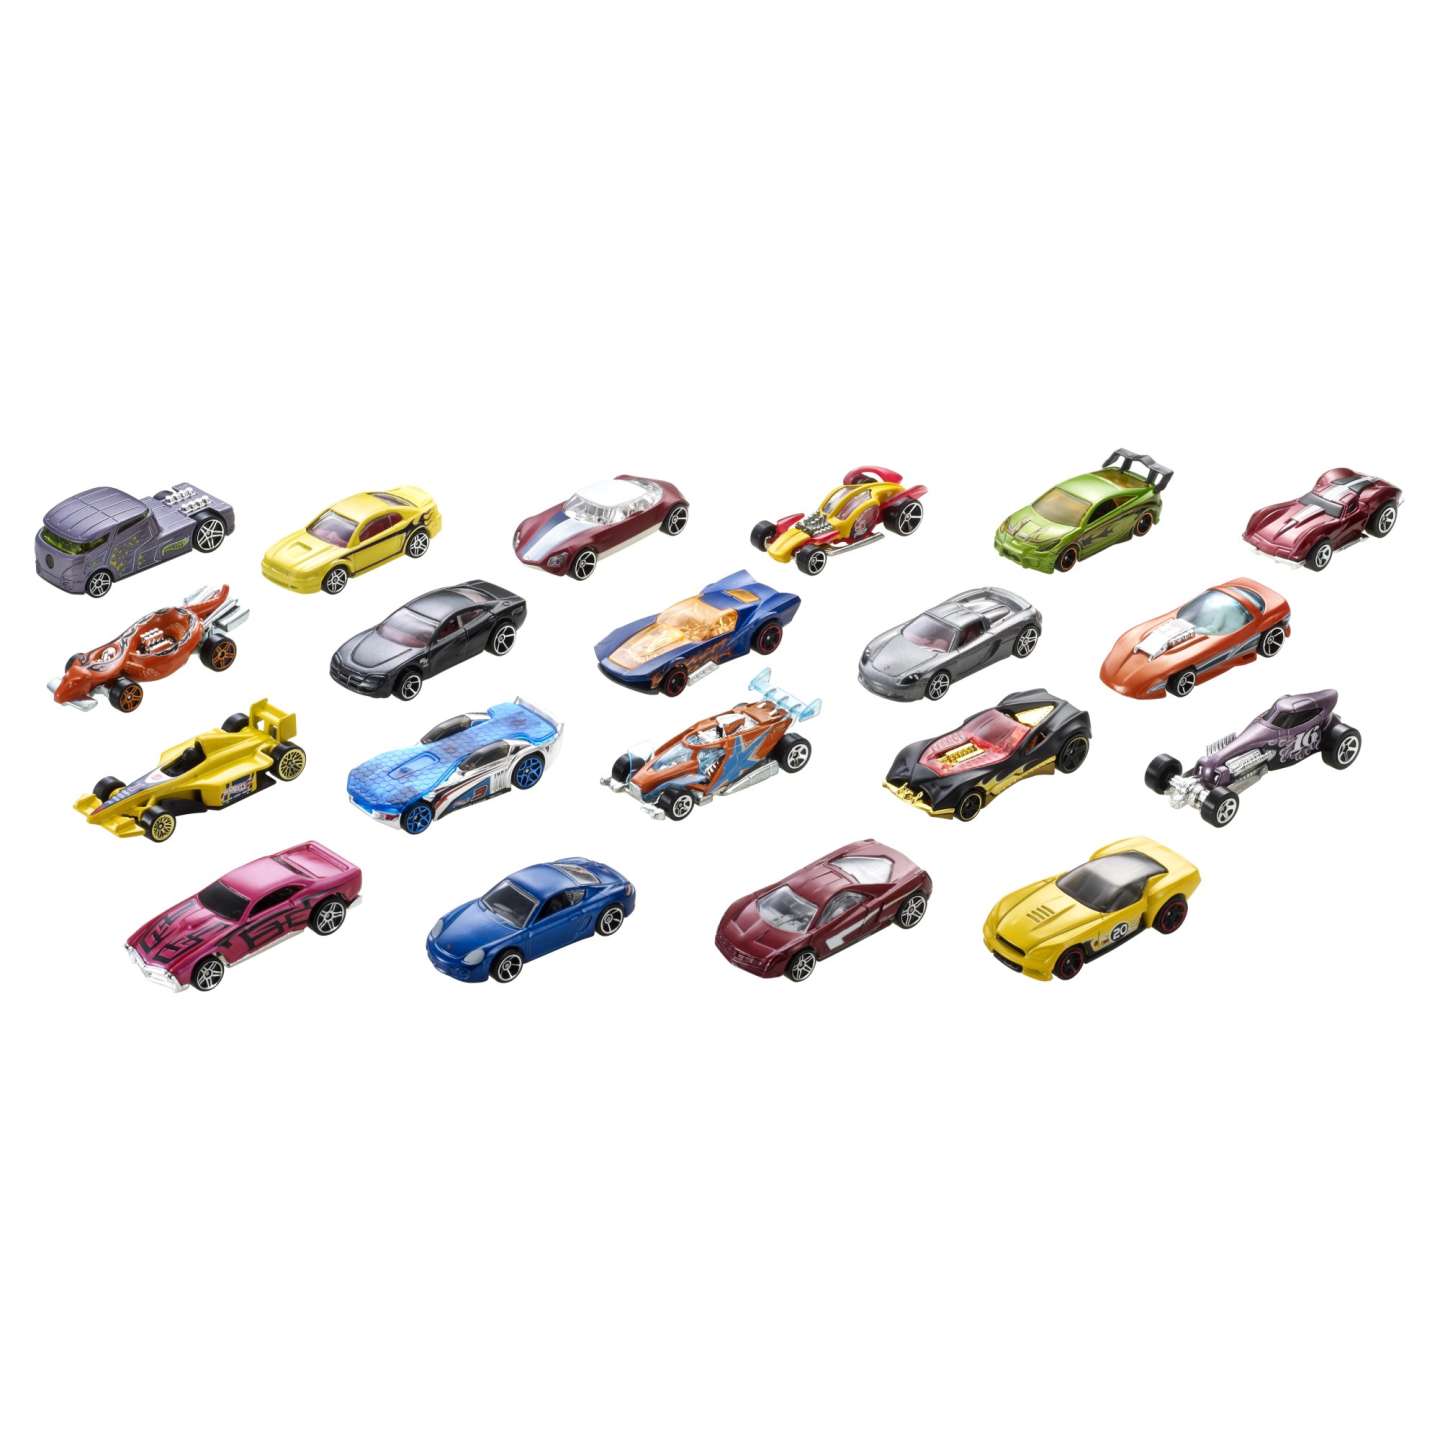 Mattel DXY59 - HotWheels - Geschenkset, Die-Cast-Fahrzeuge, 1:64, 20er Pack